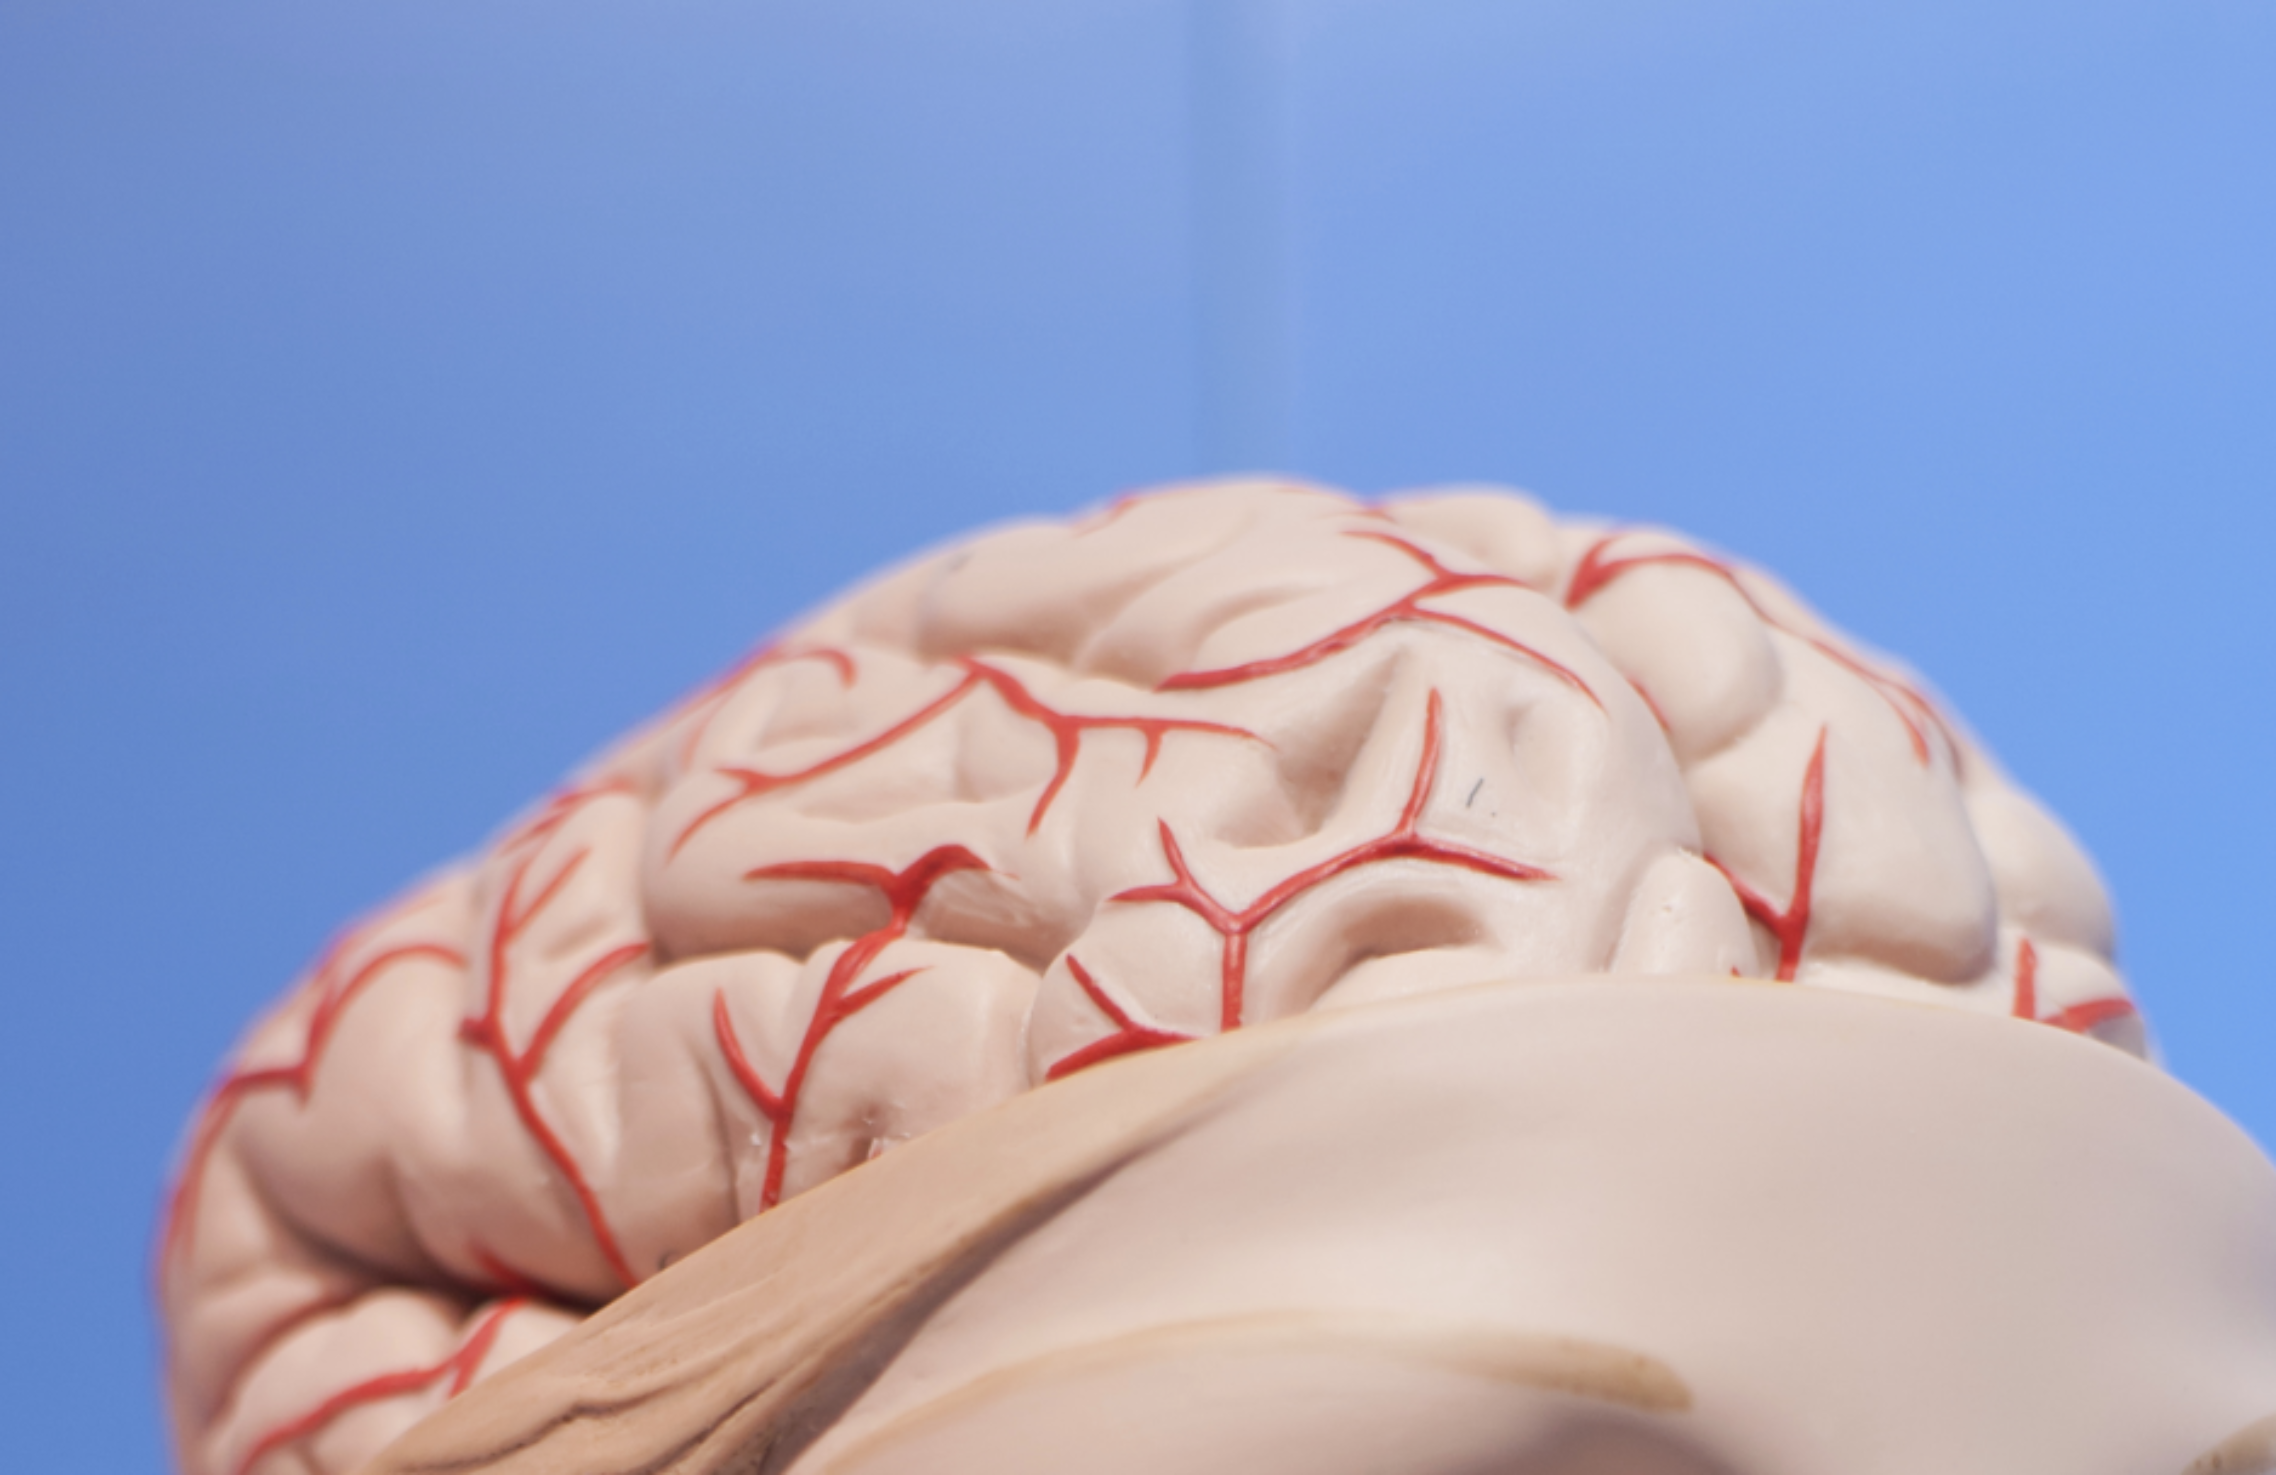 Human organs, the brain model